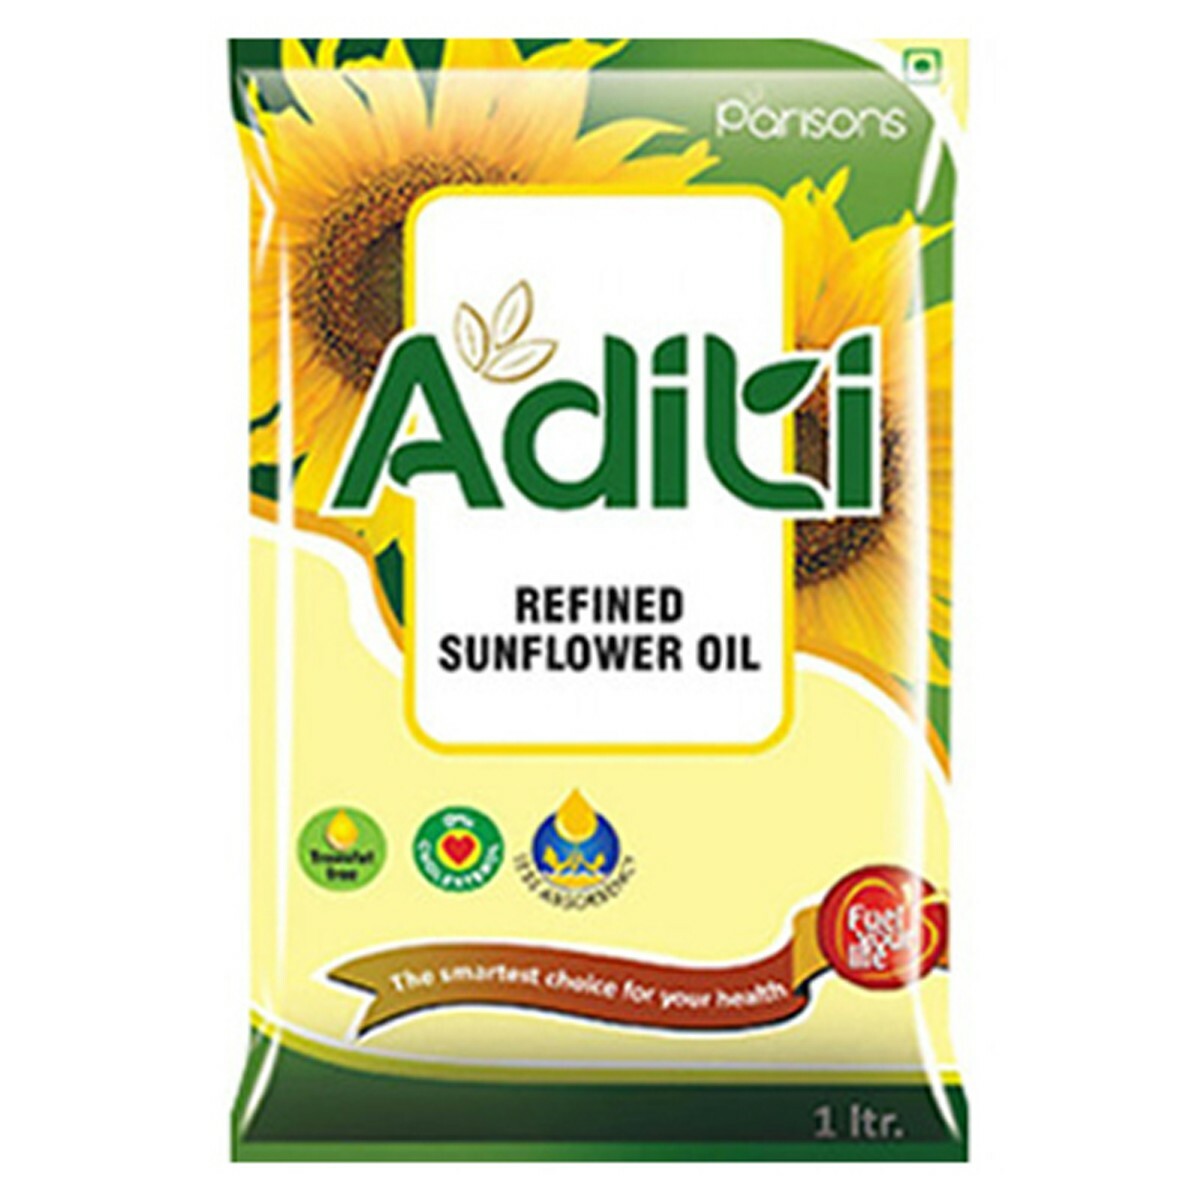 Aditi Refined Sunflower Oil 1Litre